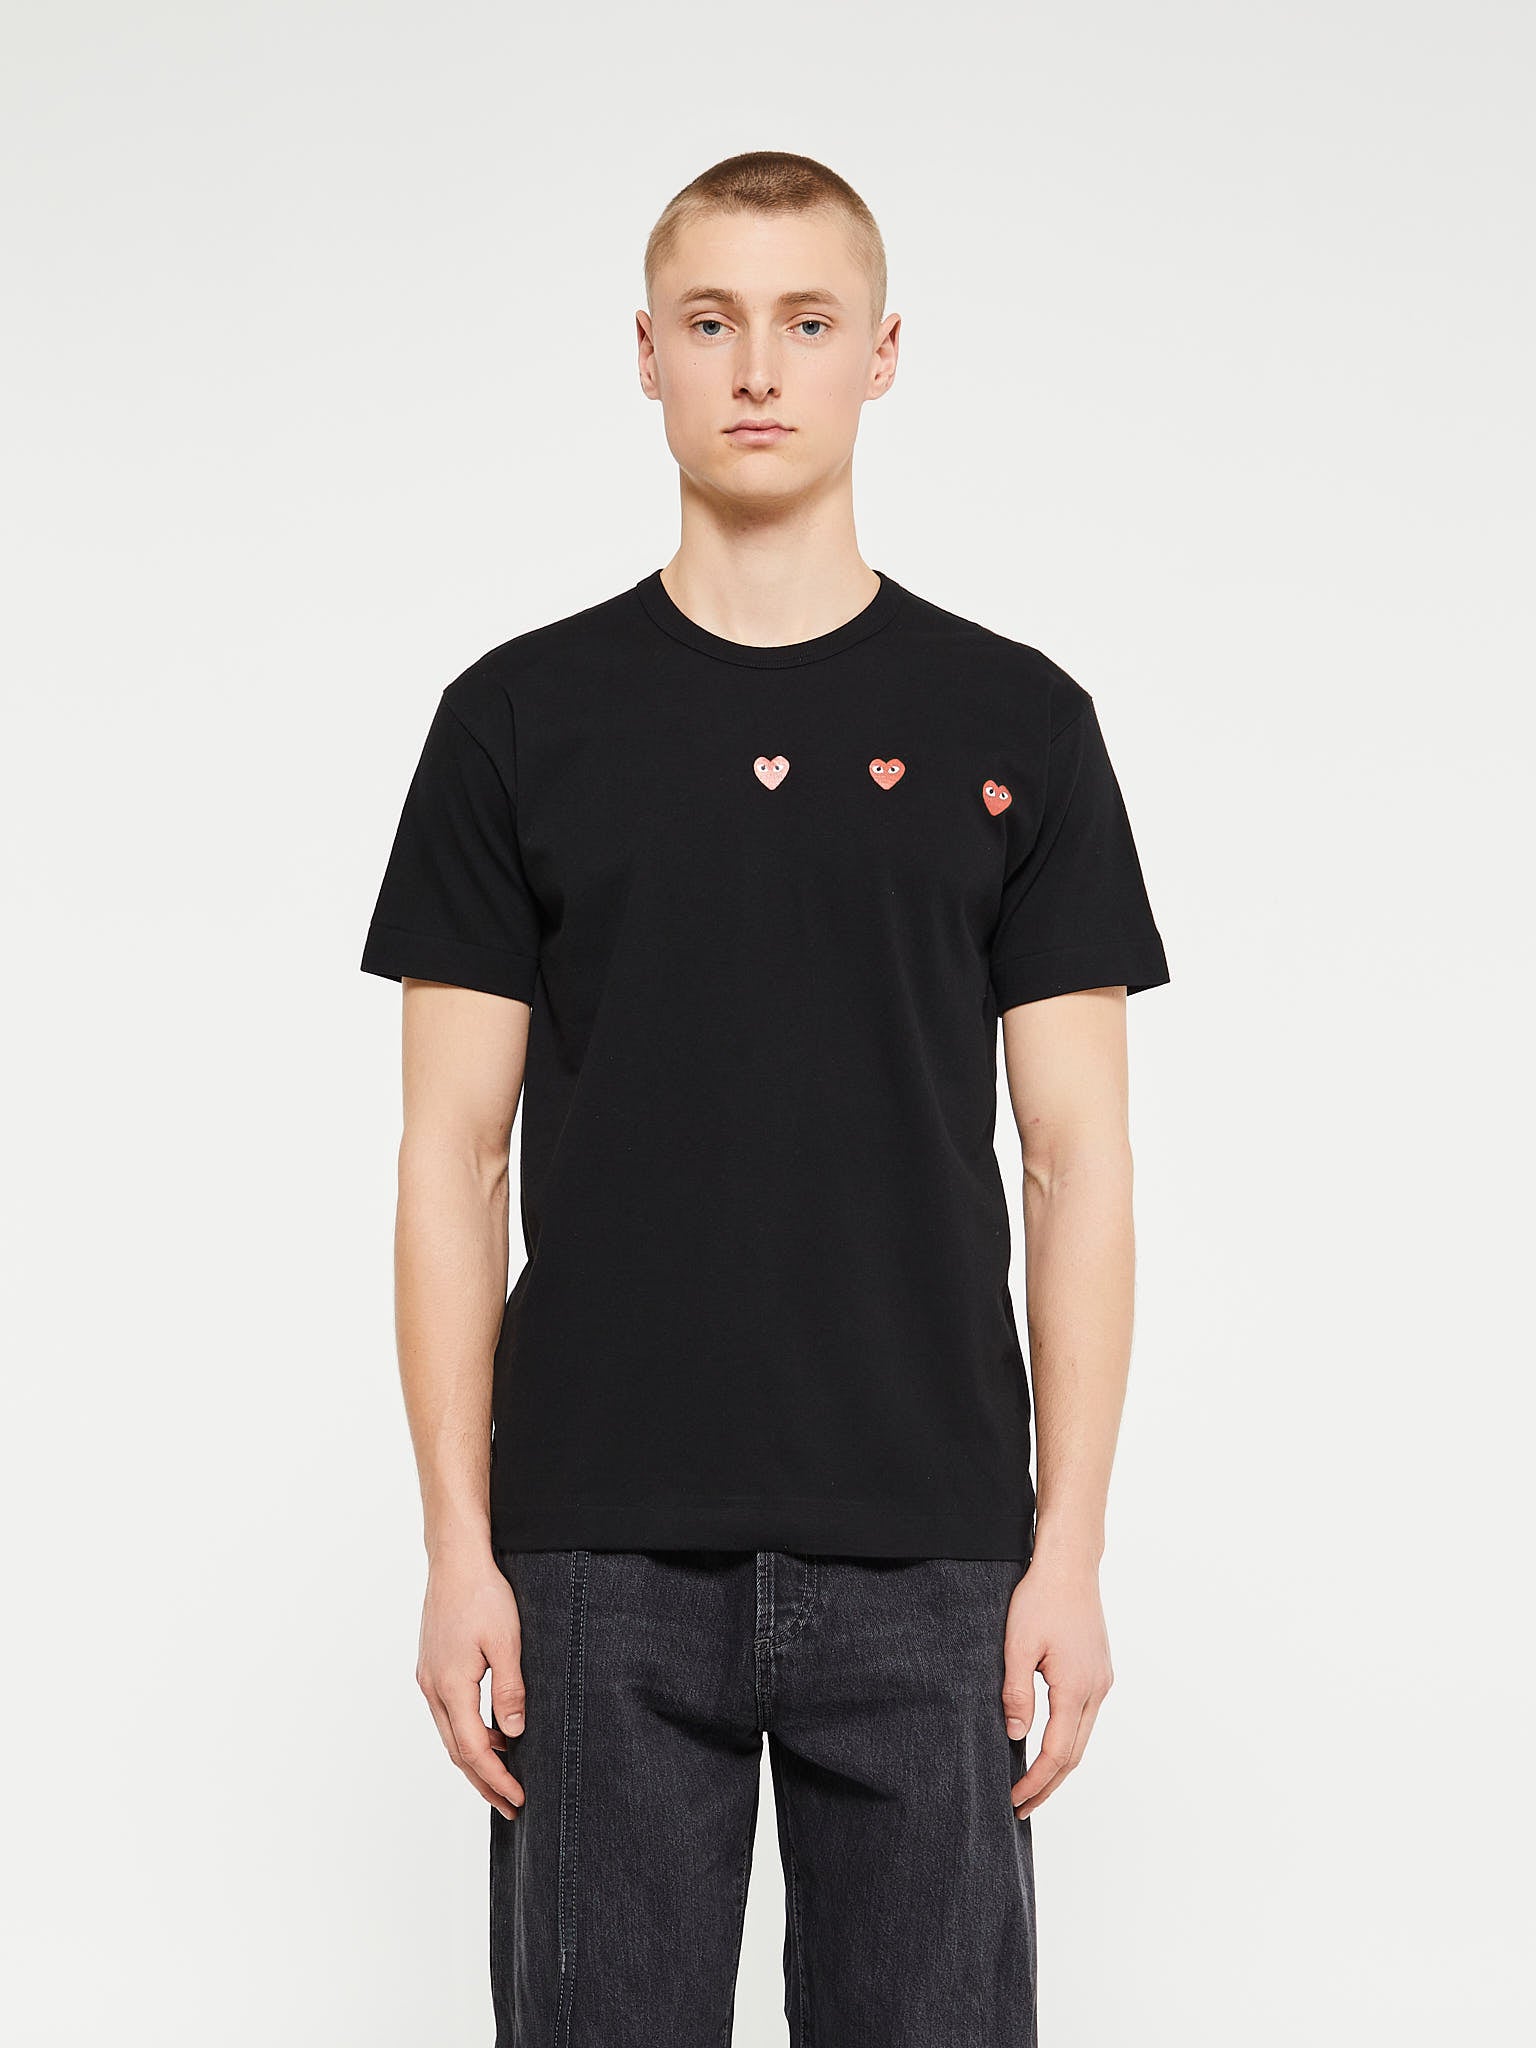 Comme des Garçons PLAY - Horizontal 3 Hearts Short Sleeve T-Shirt in Black